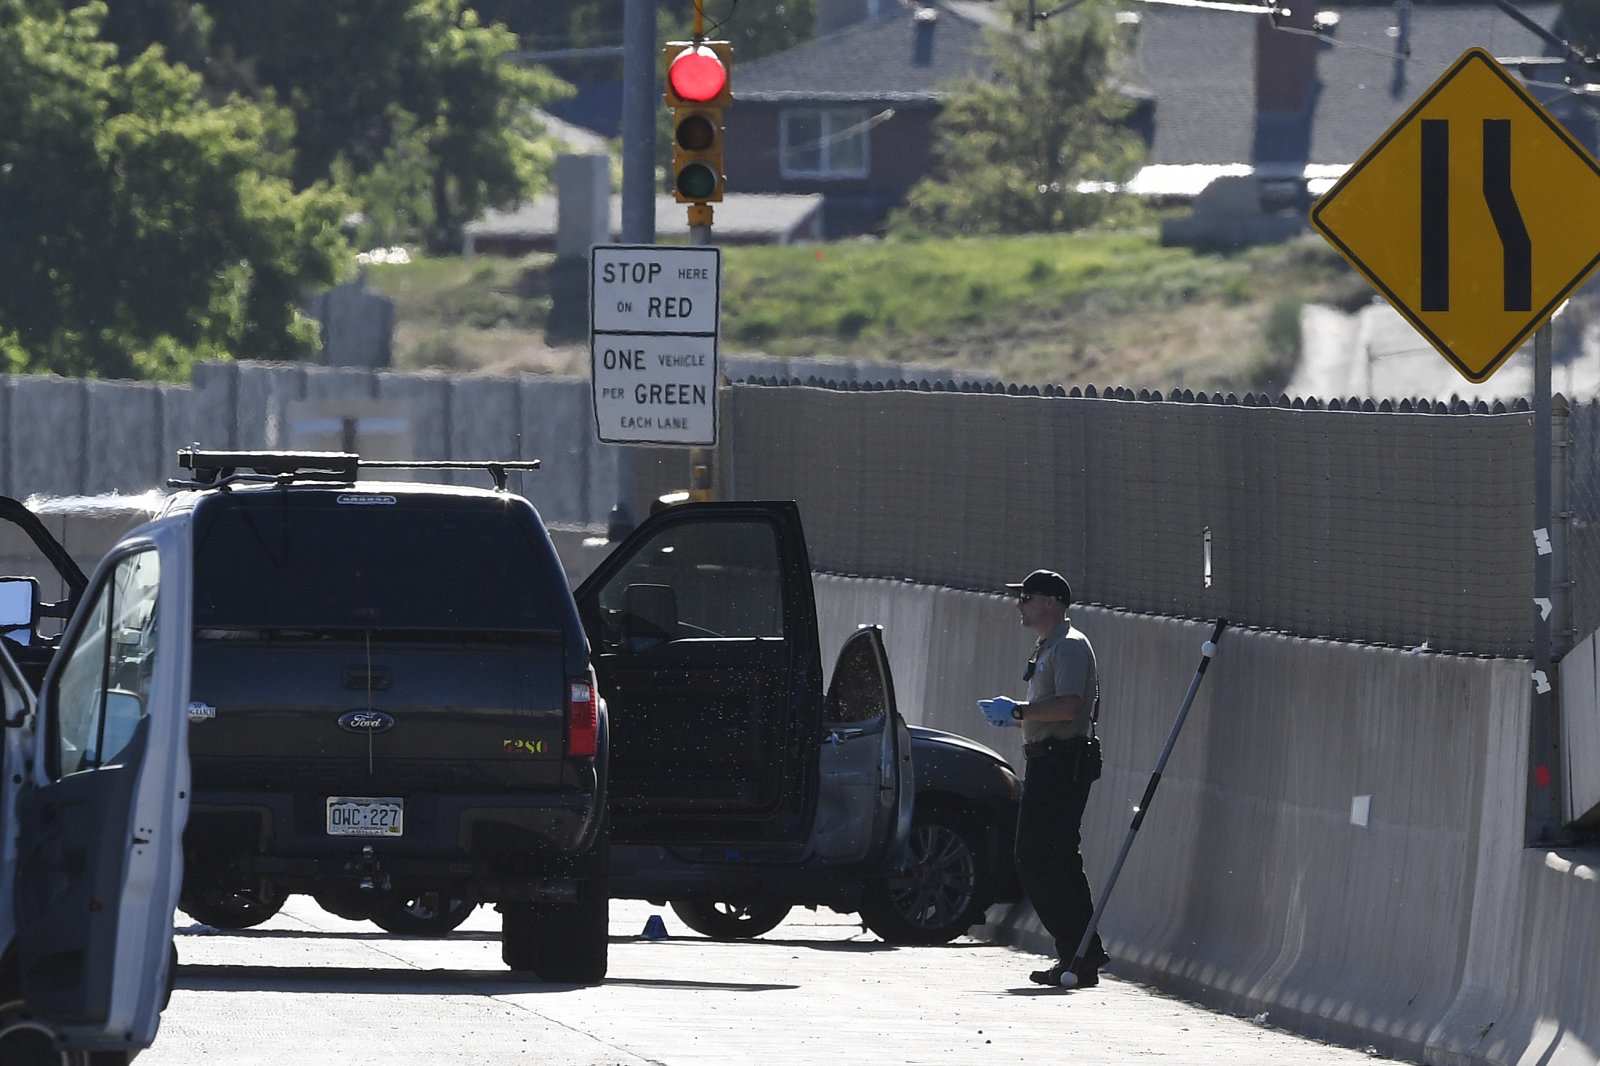 Denver Uber driver kills passenger in alleged self-defense incident | DeviceDaily.com